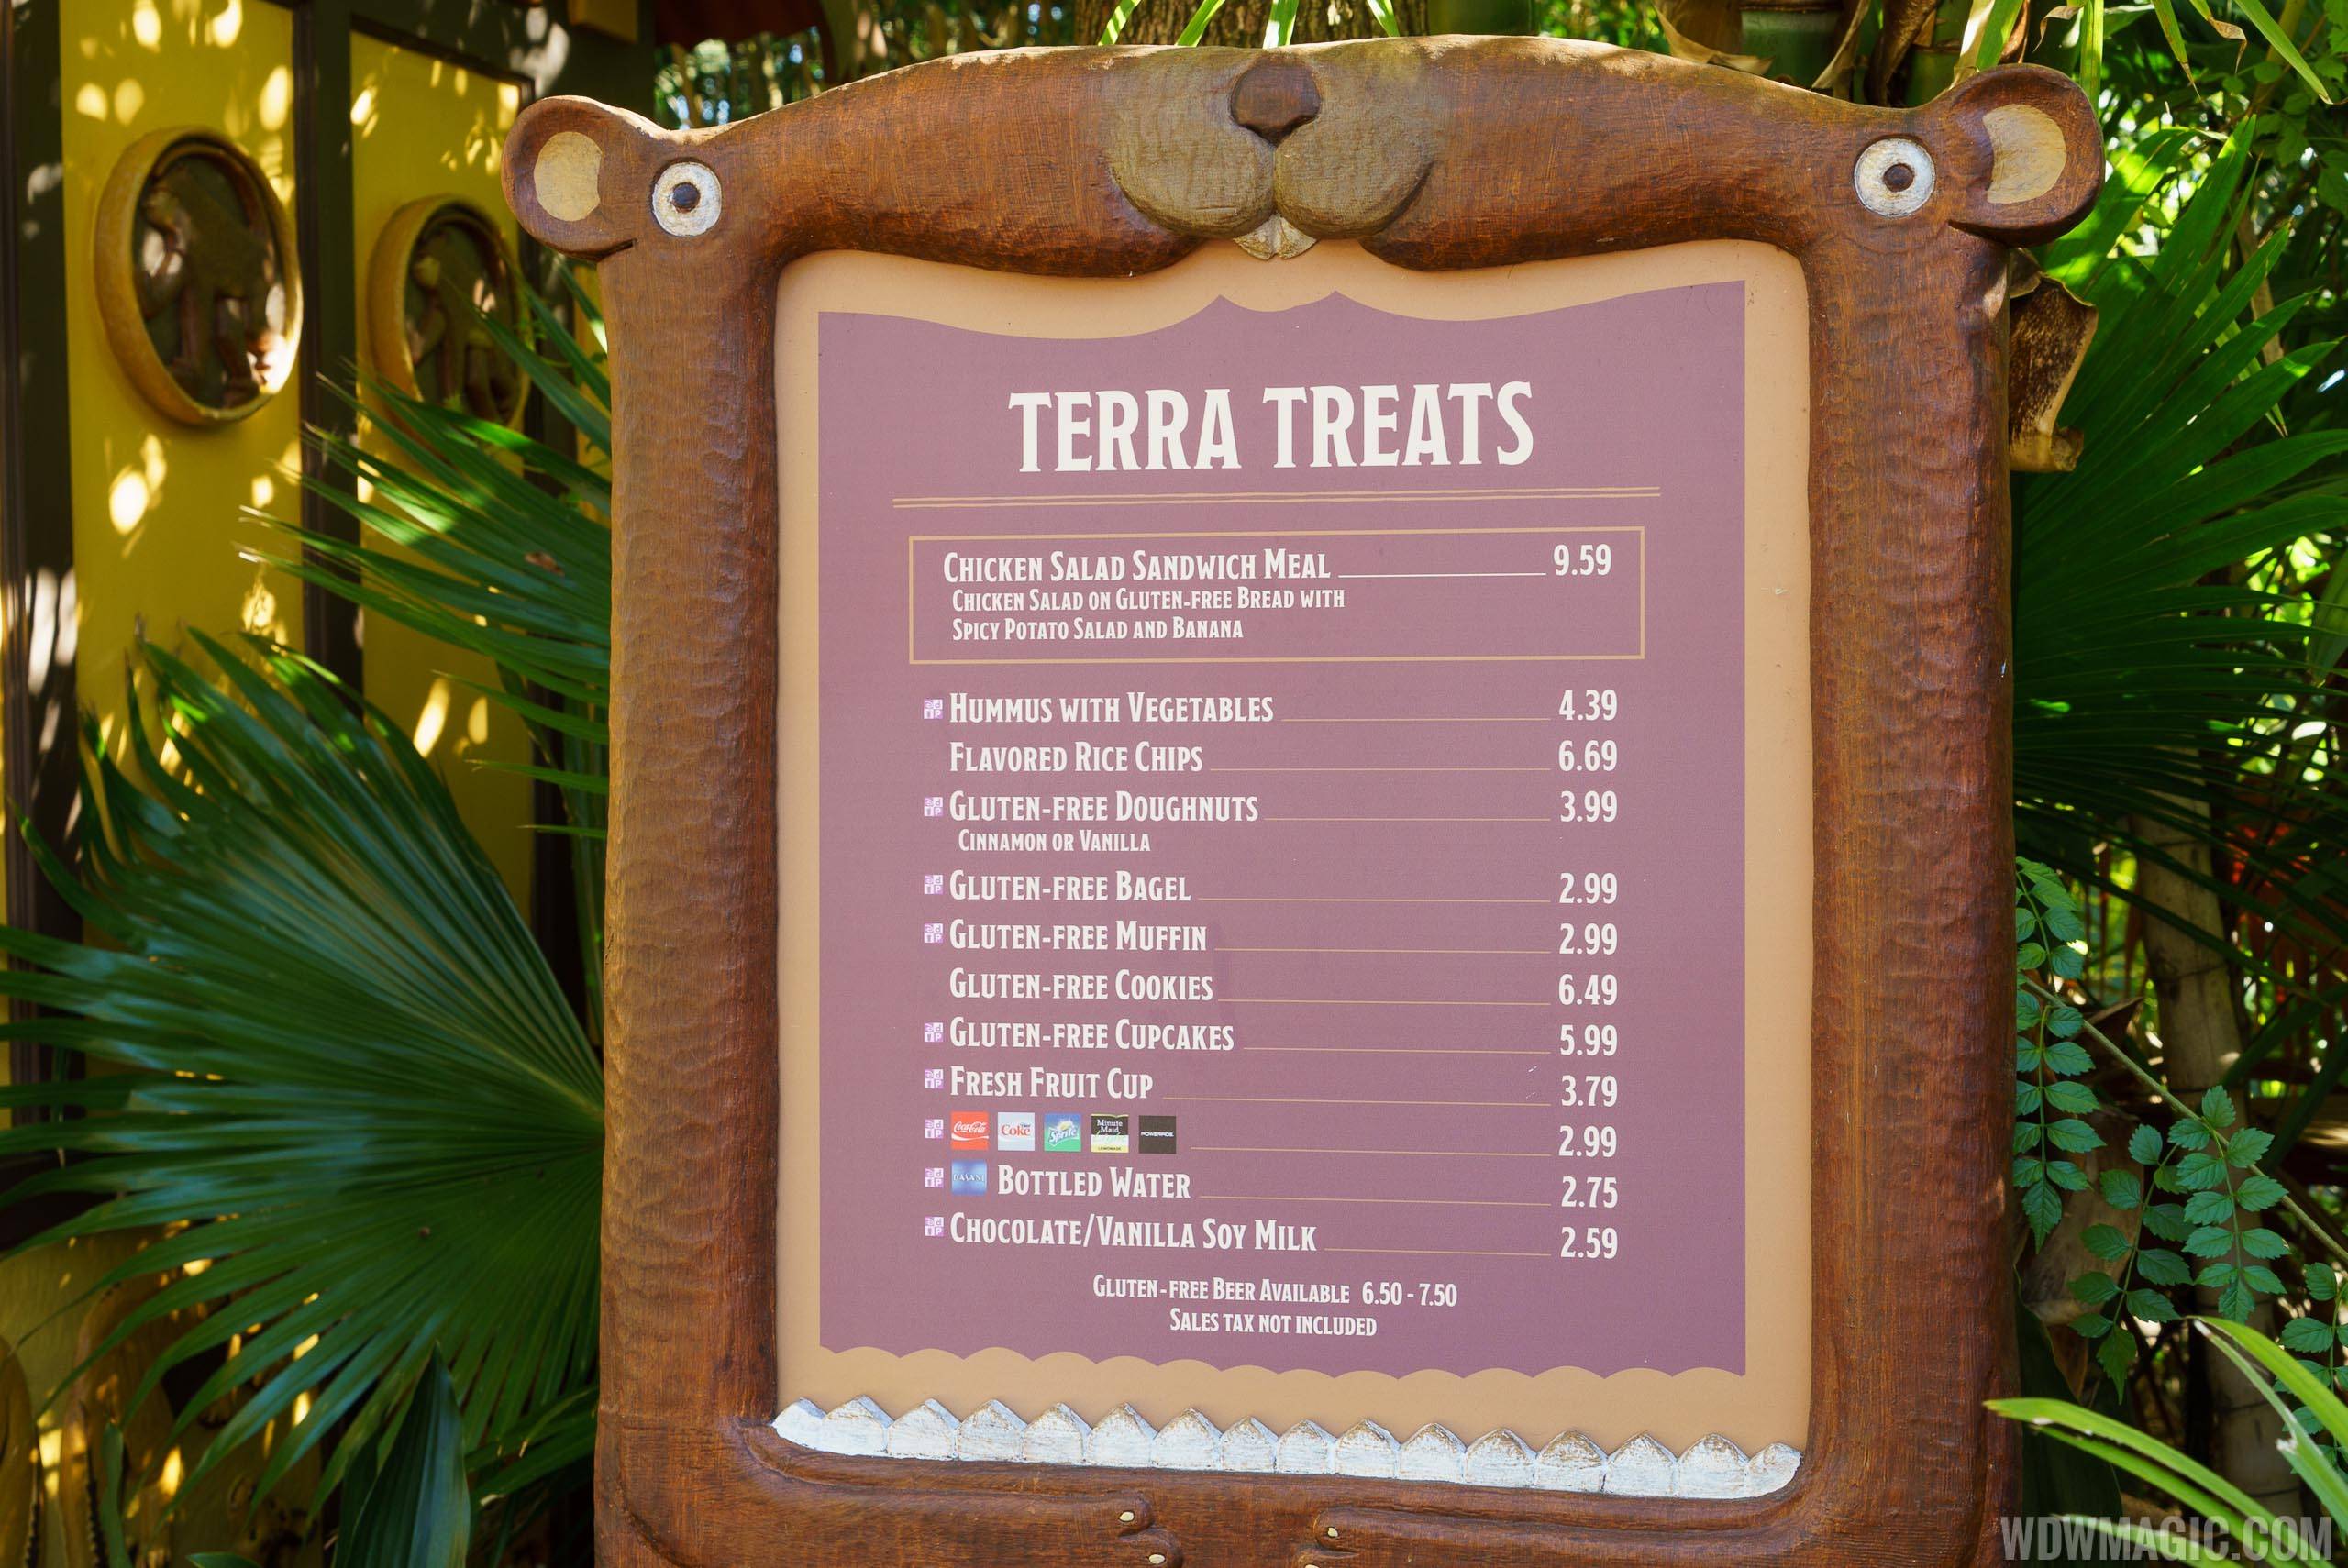 More snack kiosks reopening at Disney's Animal Kingdom